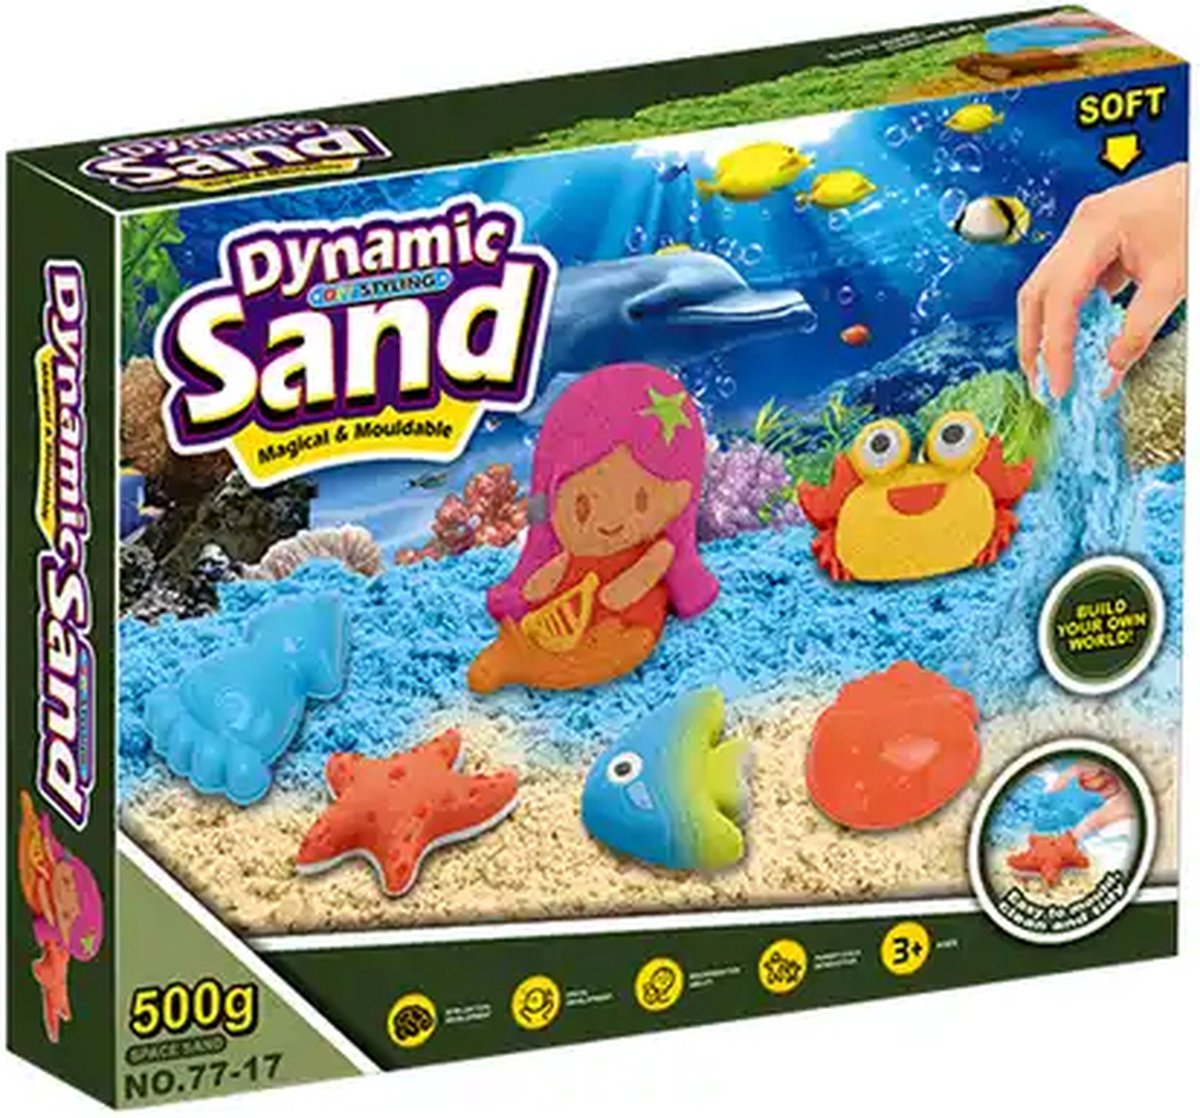 Dynamic Sand - Speelzand - Kinetisch Zand - 3+ Jaar - Oceaan Dier Schelpen - 500 GRAM